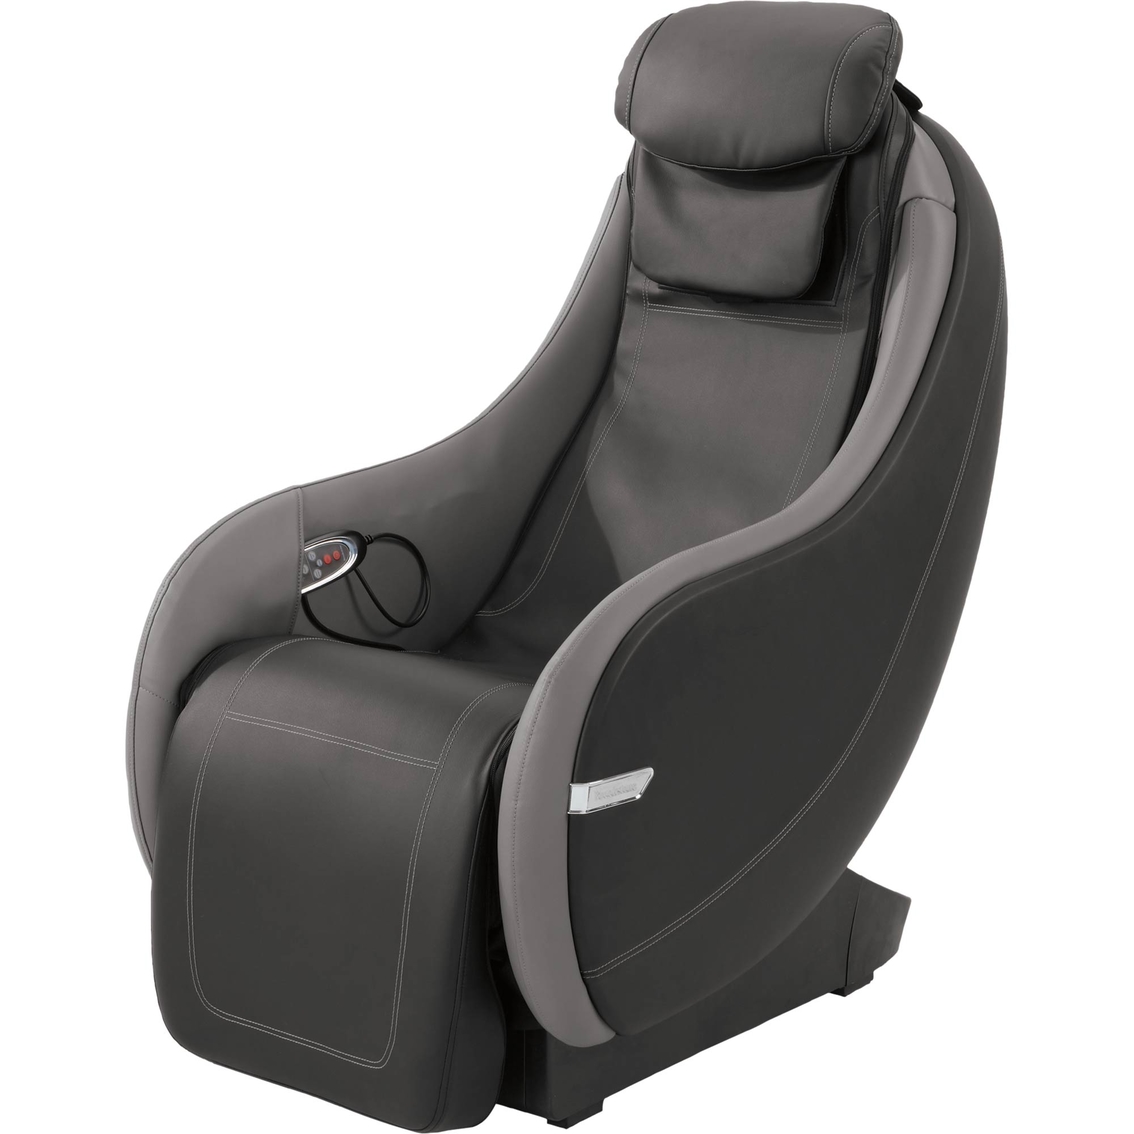 Brookstone Rock And Recline Shiatsu Massage Chair Chairs Recliners Furniture Appliances Shop The Exchange